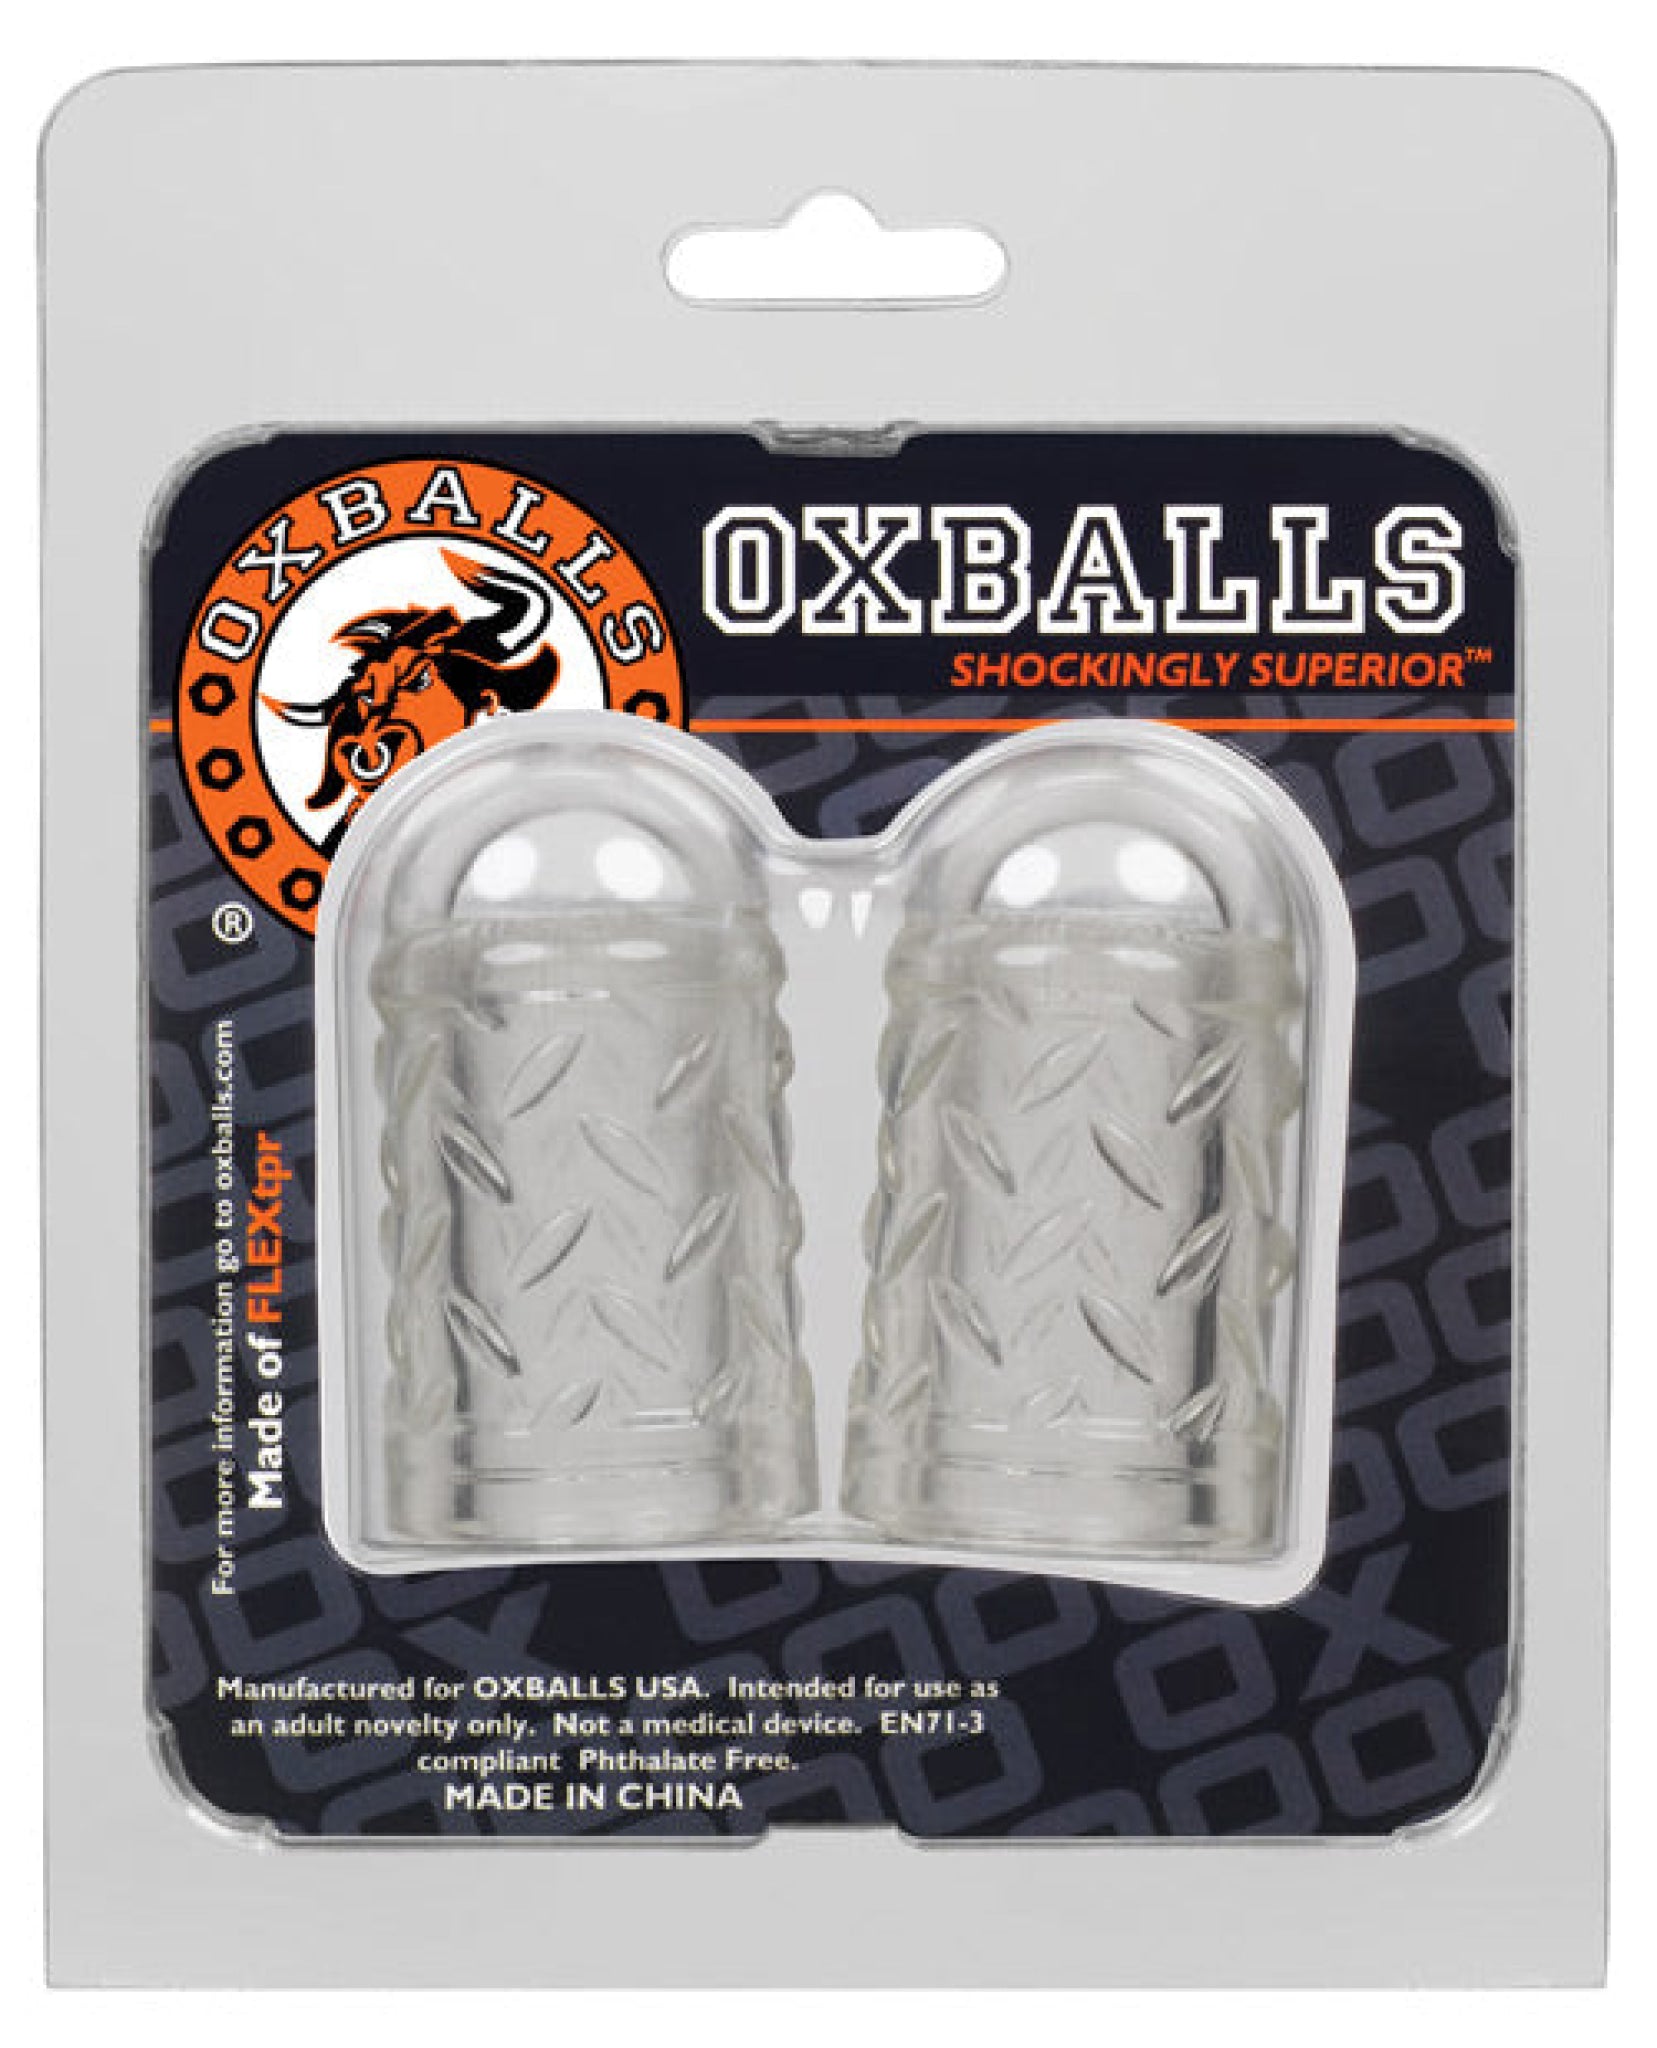 Oxballs Gripper Nipple Suckers - Clear Hunky Junk